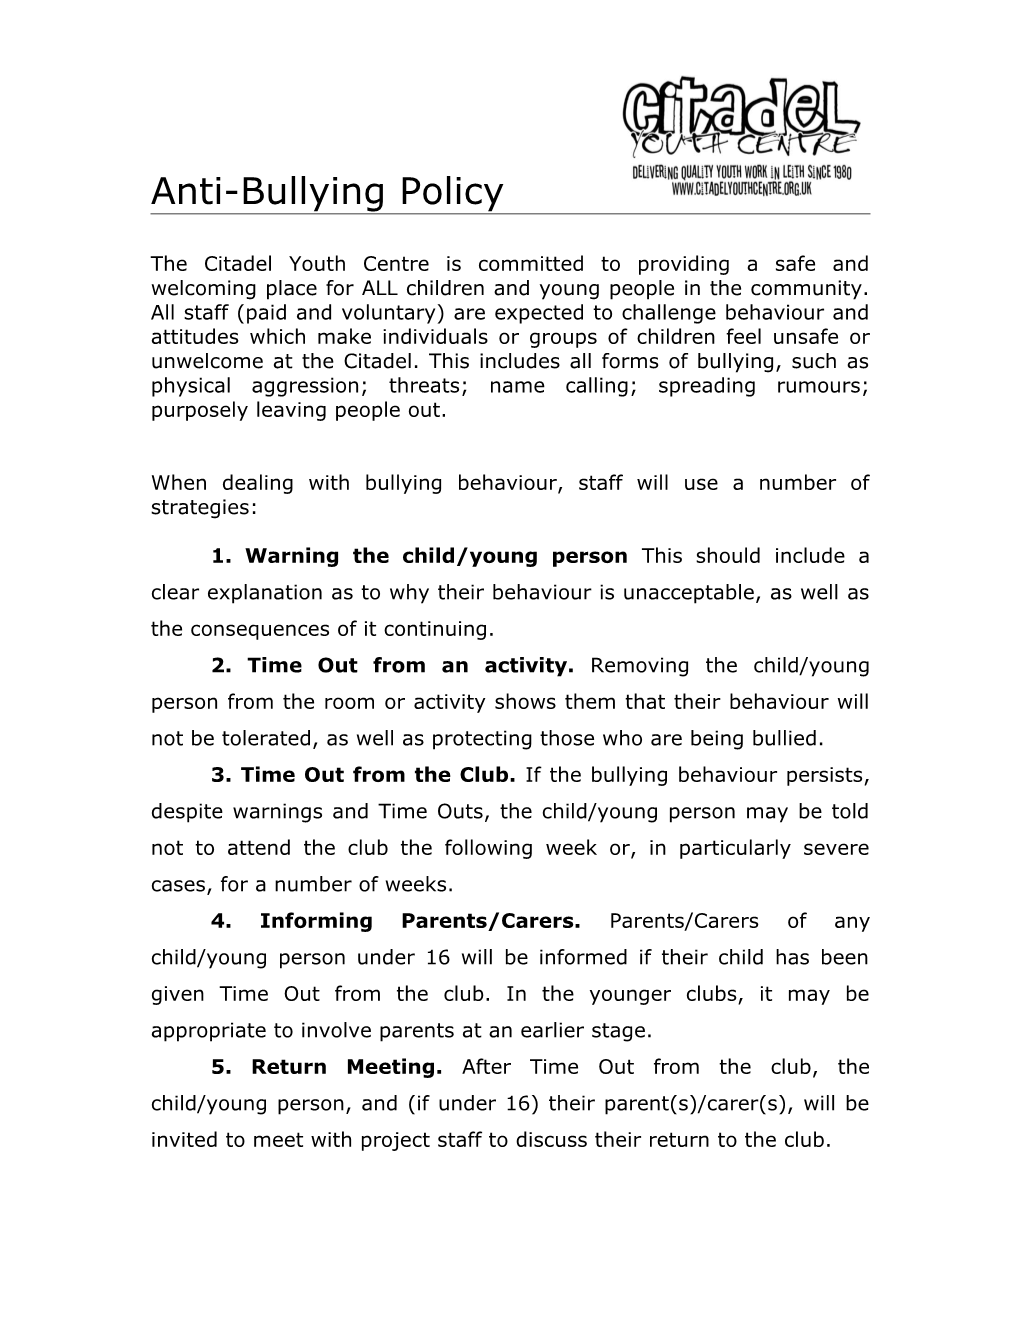 Citadel Youth Centre: Anti-Bullying Policy (Draft)